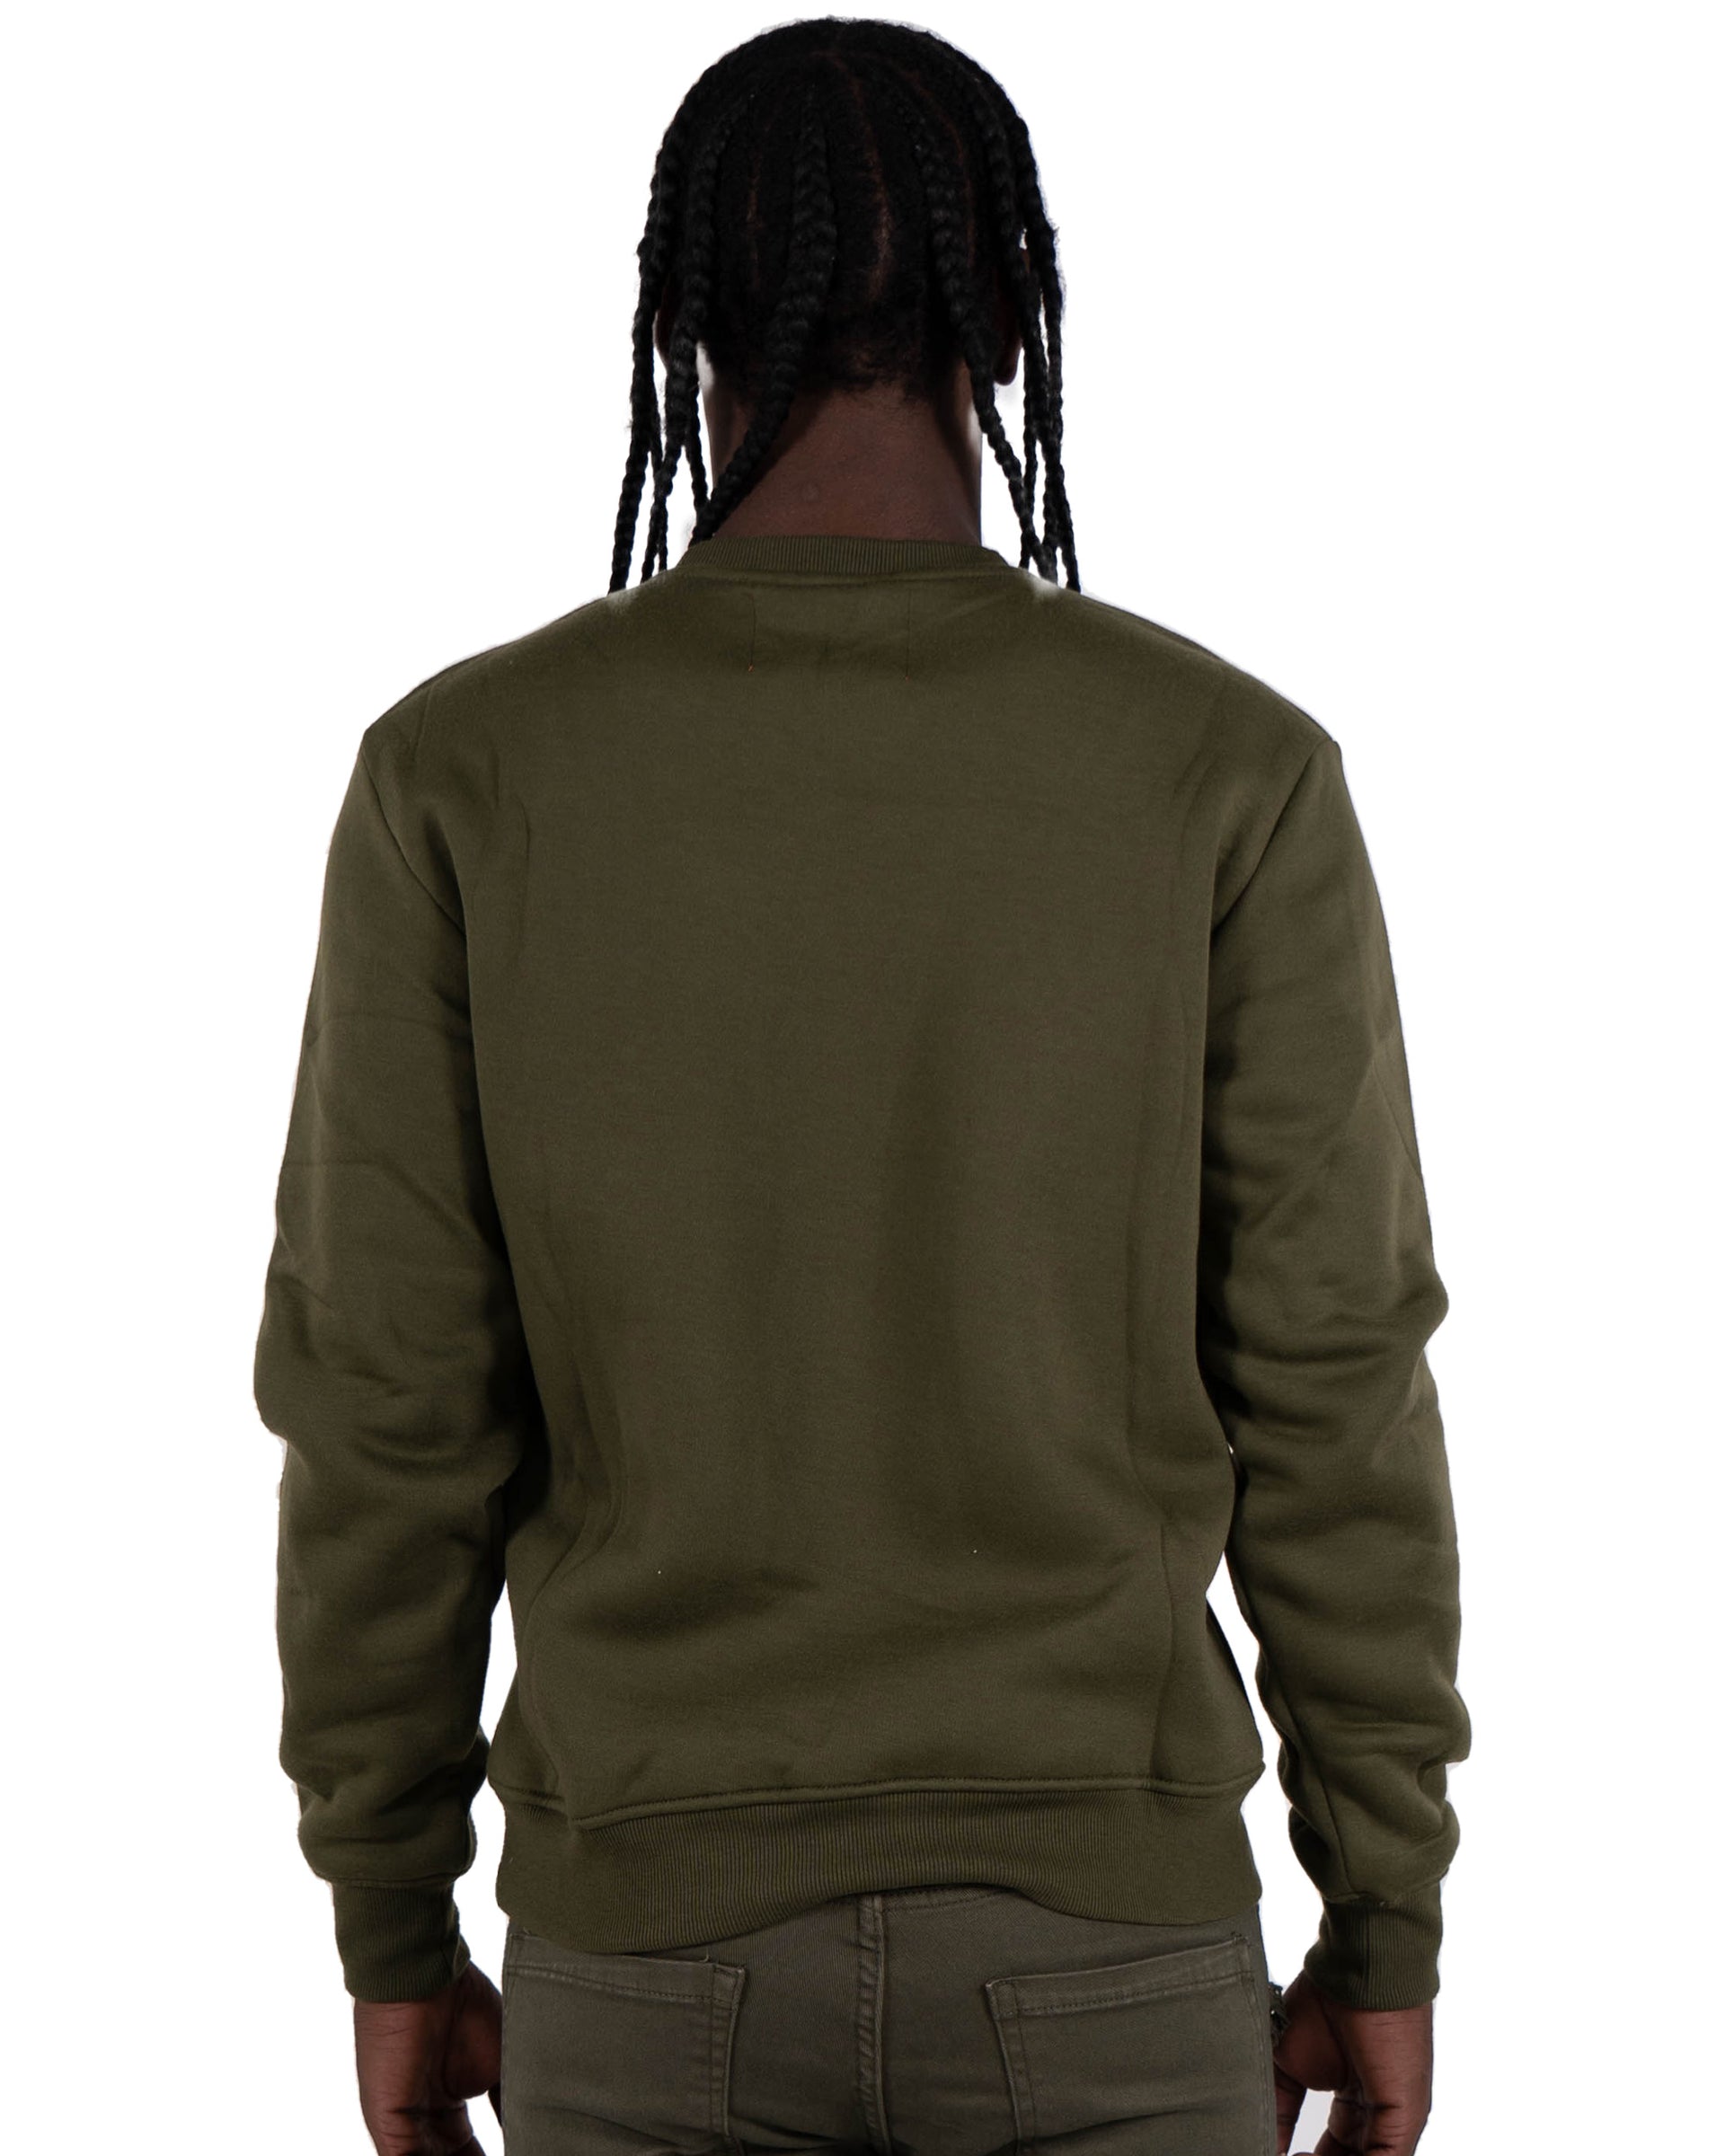 Men's "Fearless" Tiger Graphic Multi Texture Sweatshirt | Olive